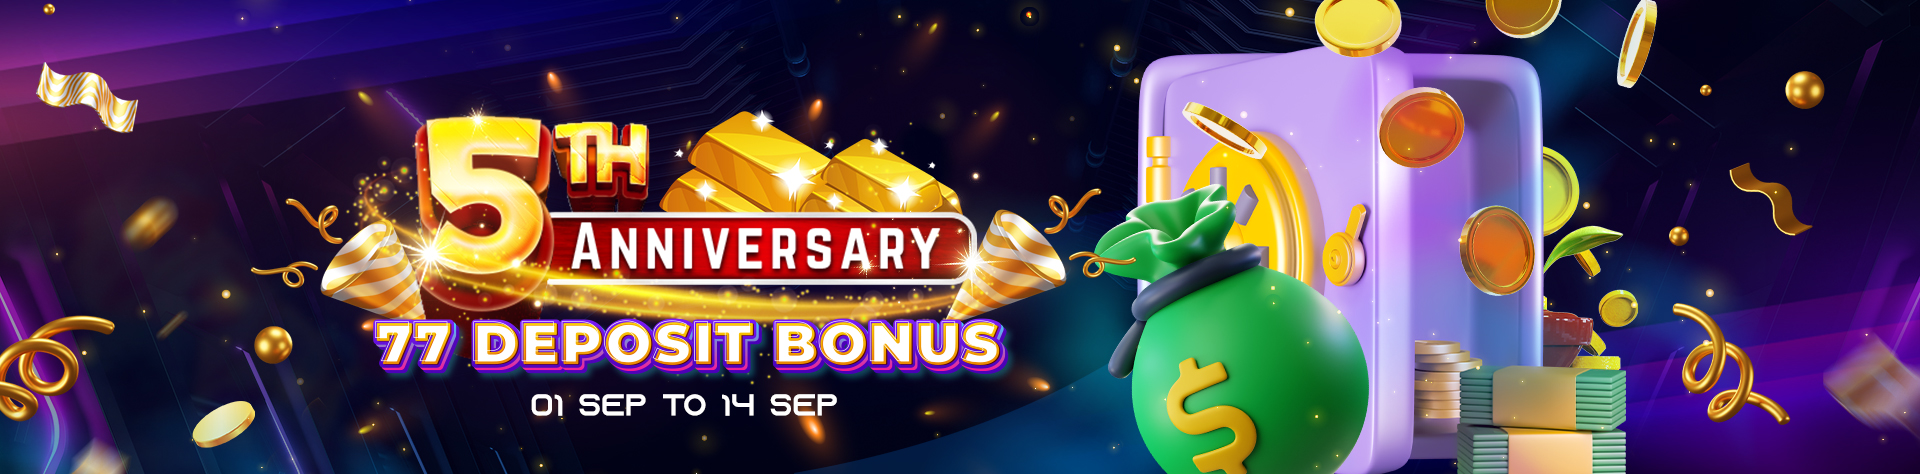 5th-Anniversary-77-Deposit-Bonus.jpg